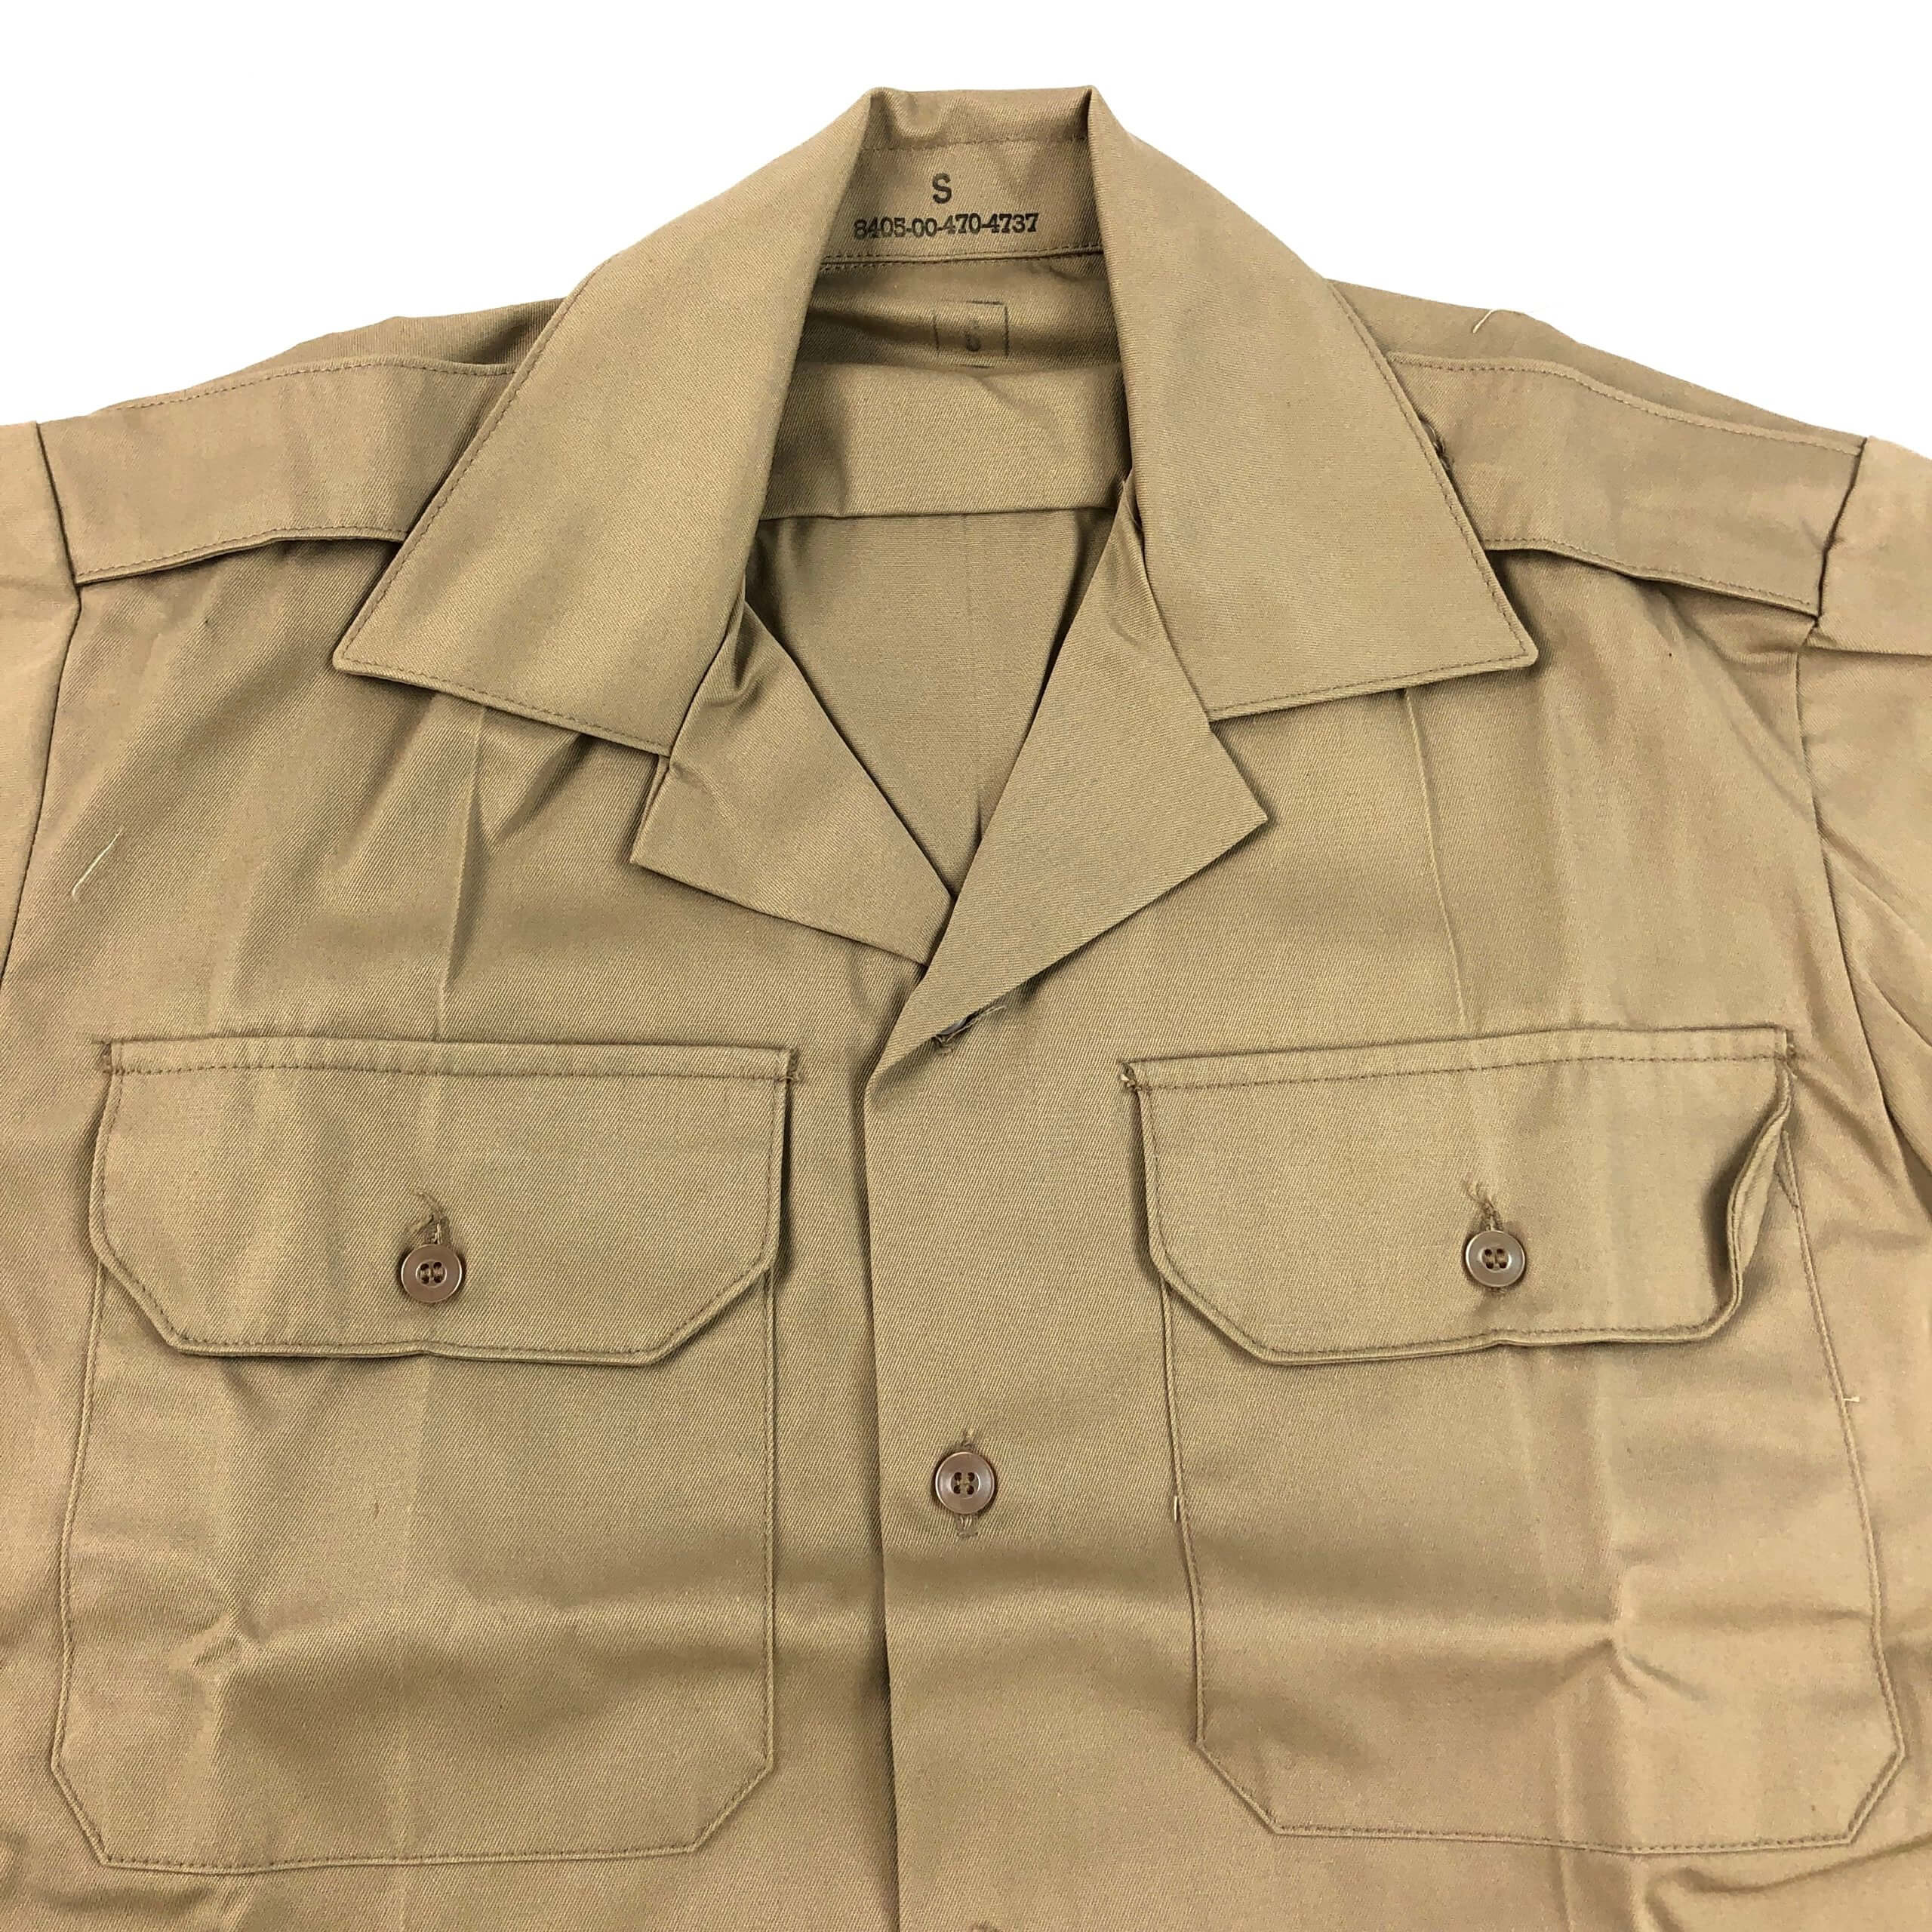 US Army Class B Short Sleeve Shirt, Tan 445 [Genuine Issue]